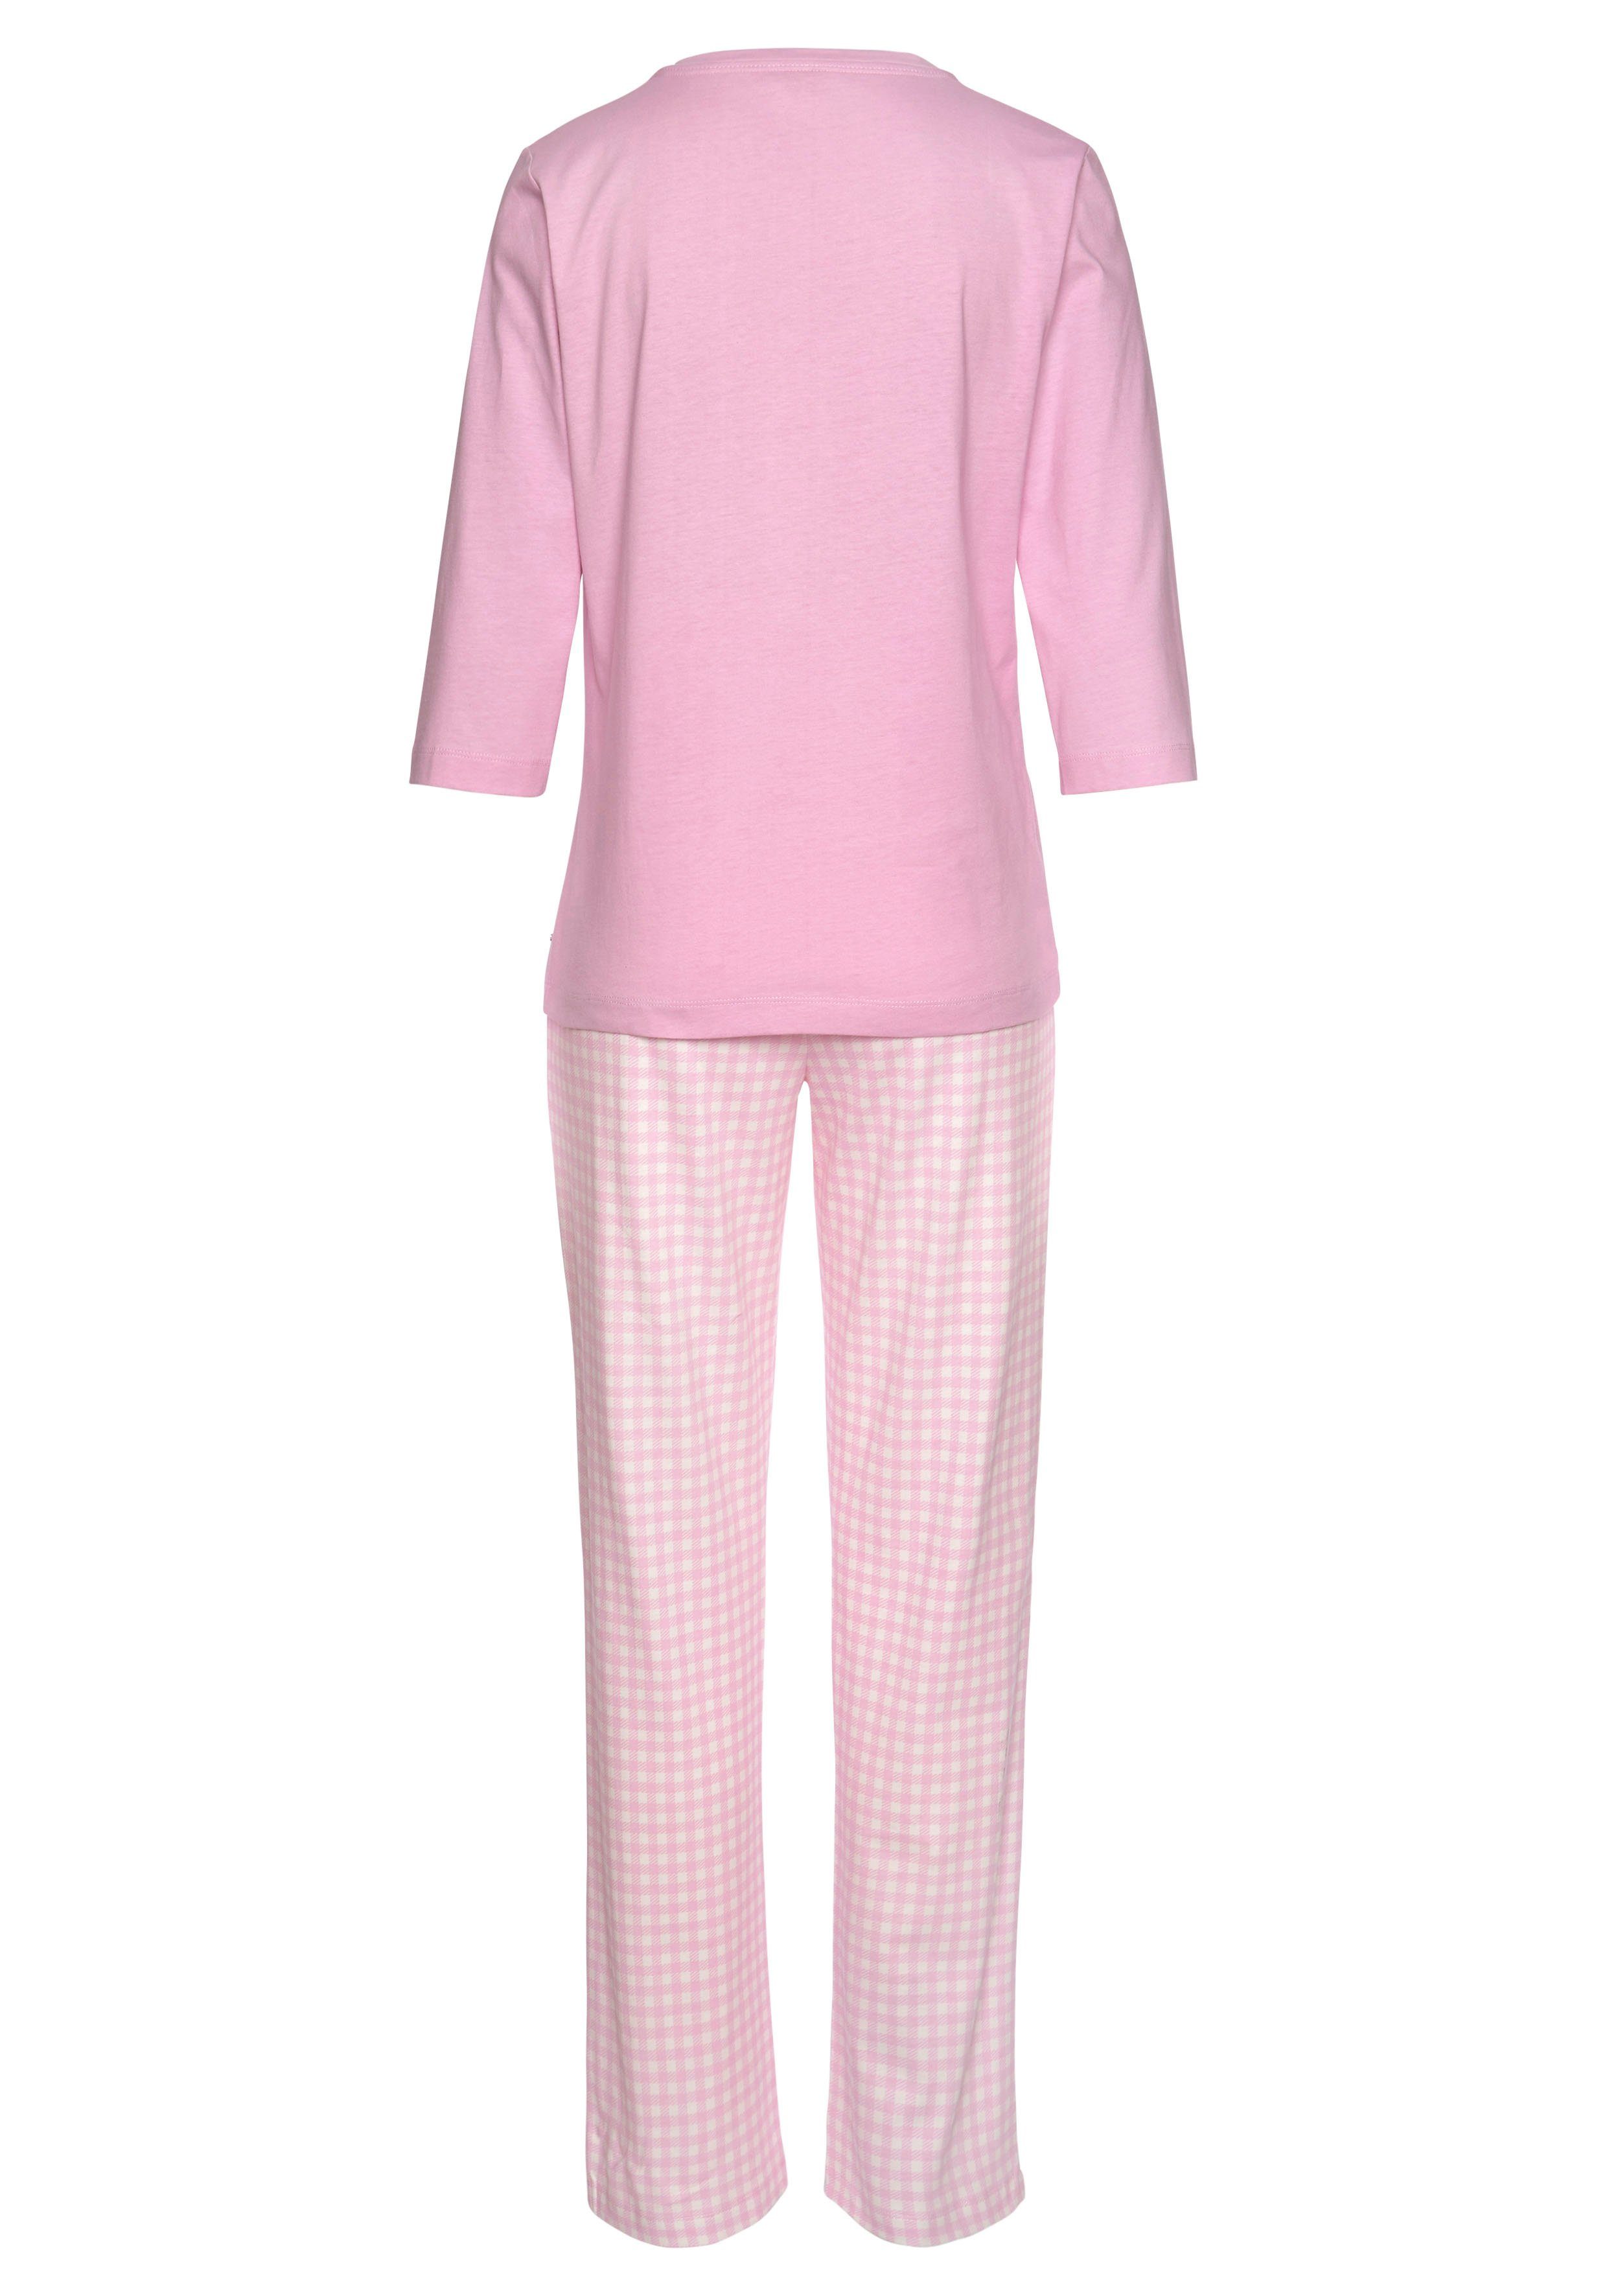 tlg., Stück) 1 rosa-kariert Pyjama (2 s.Oliver